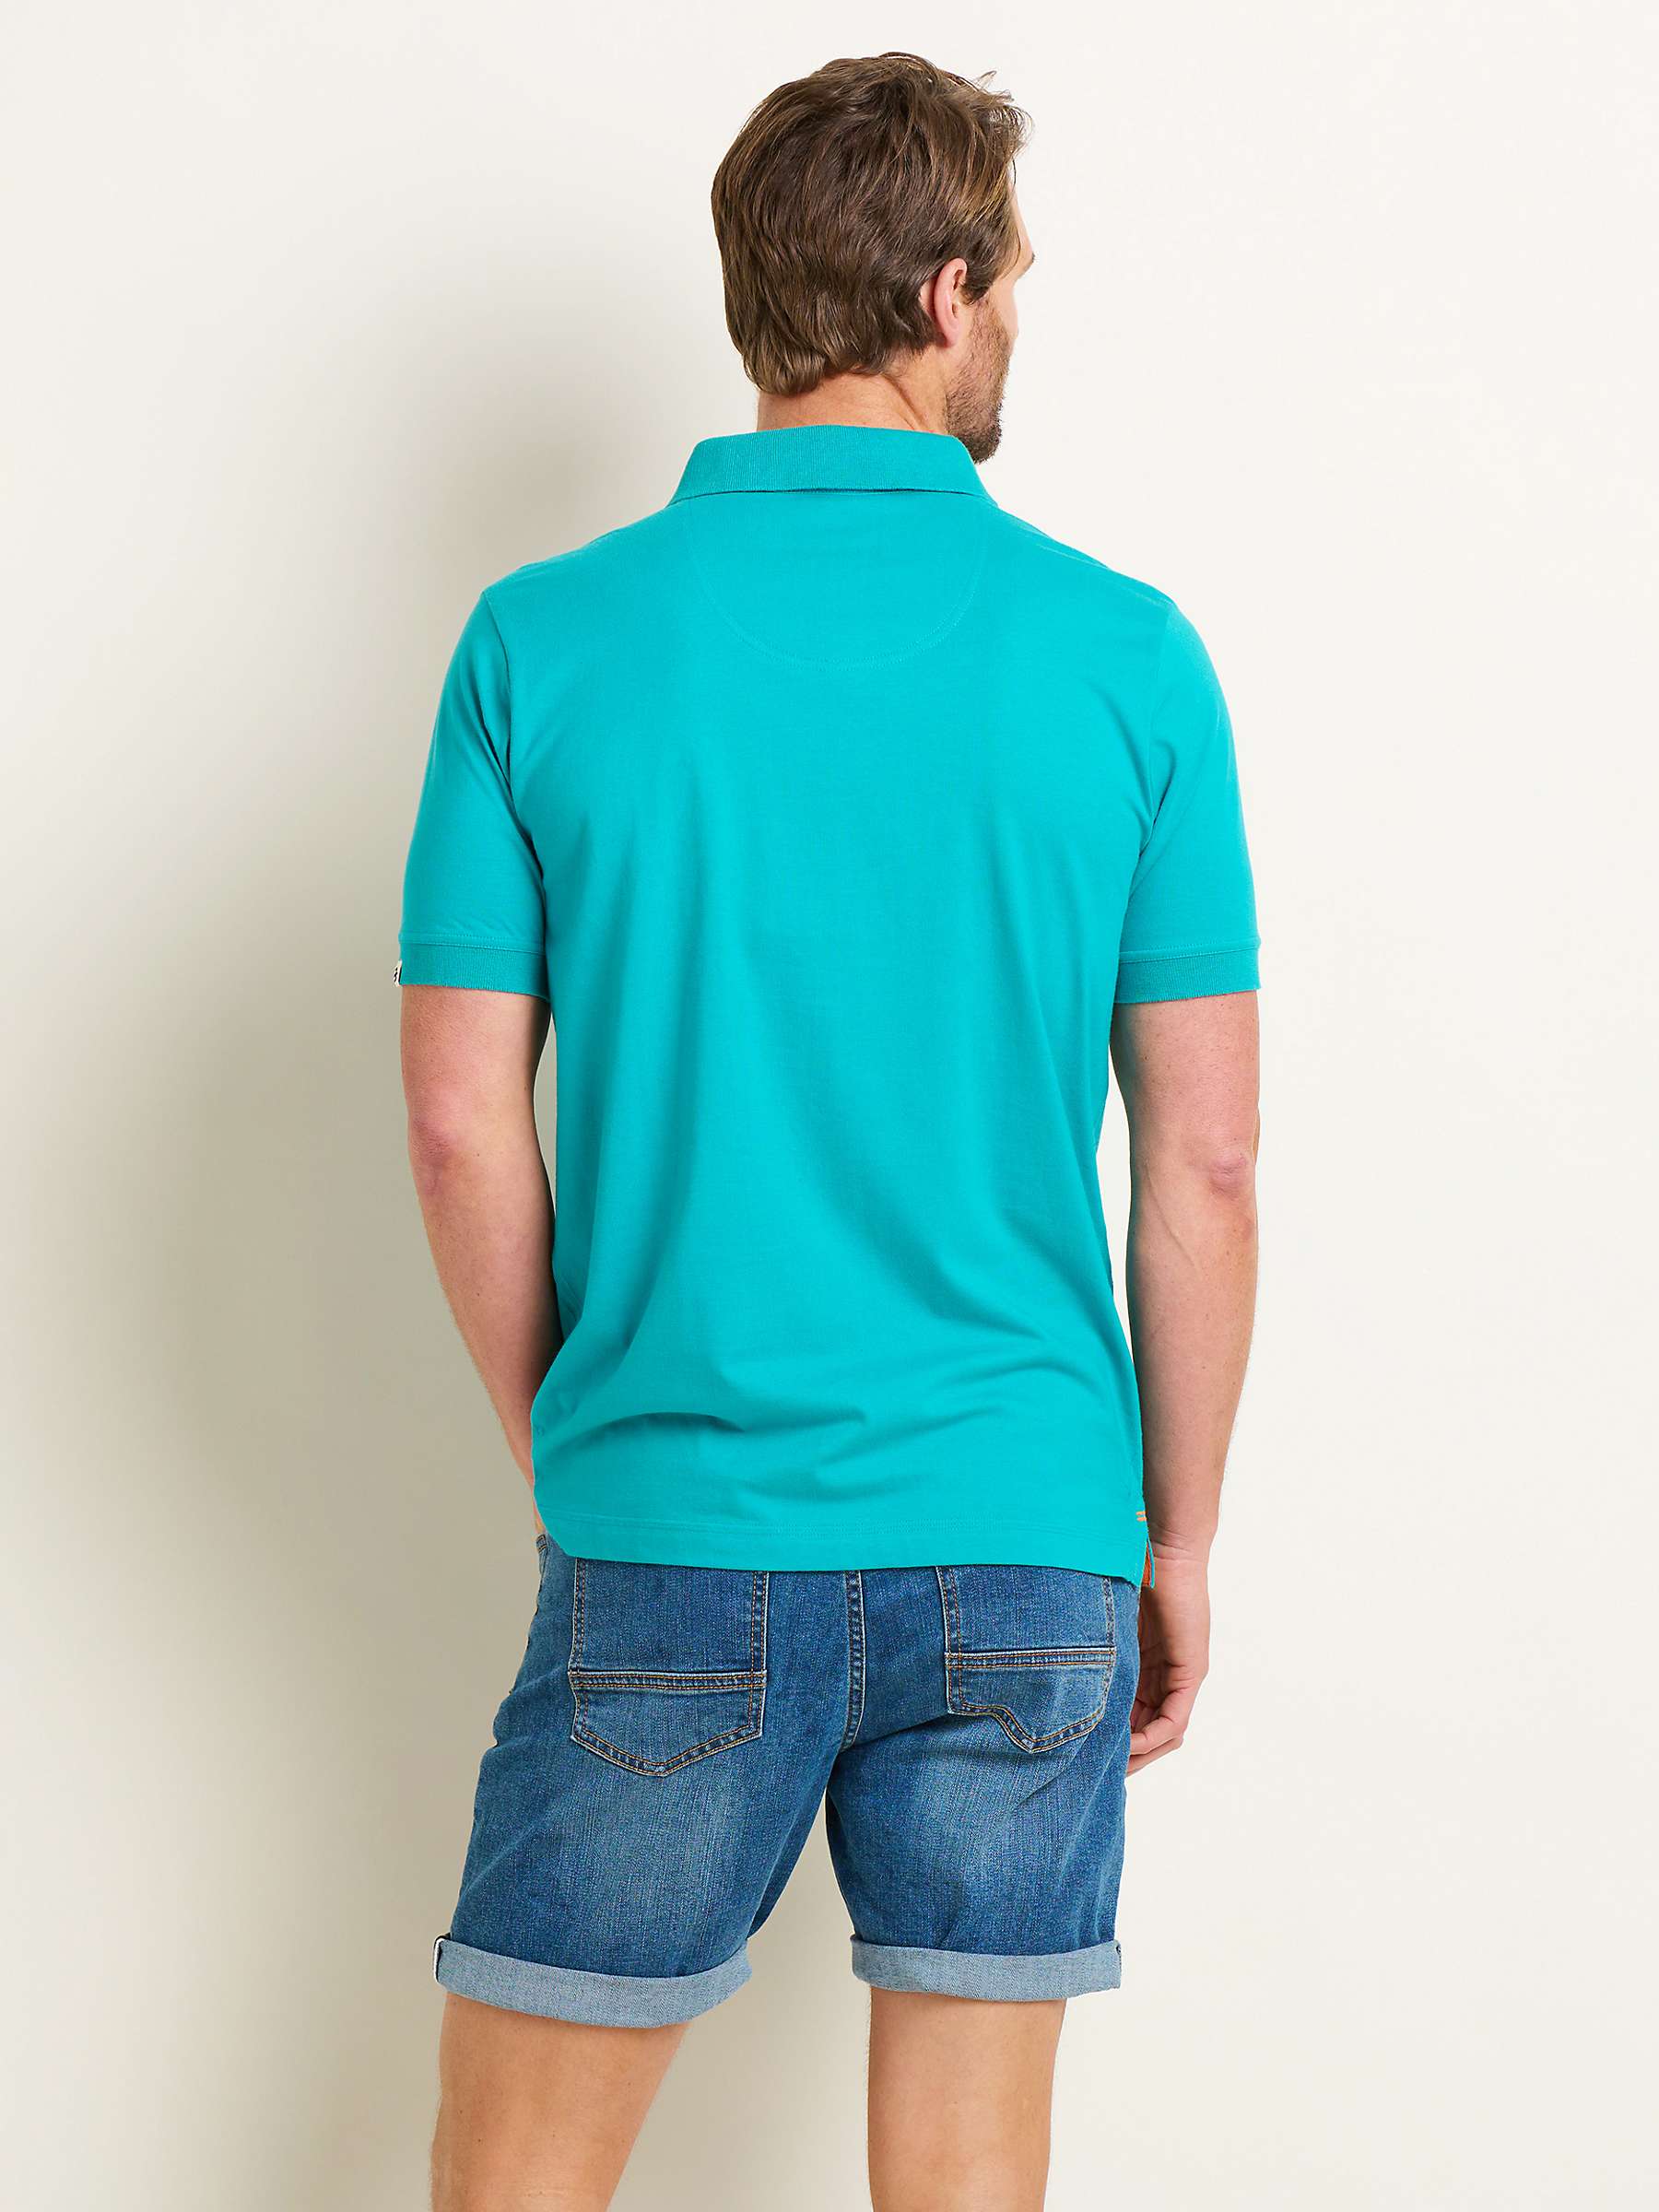 Buy Brakeburn Heritage Polo Shirt, Turquoise Online at johnlewis.com